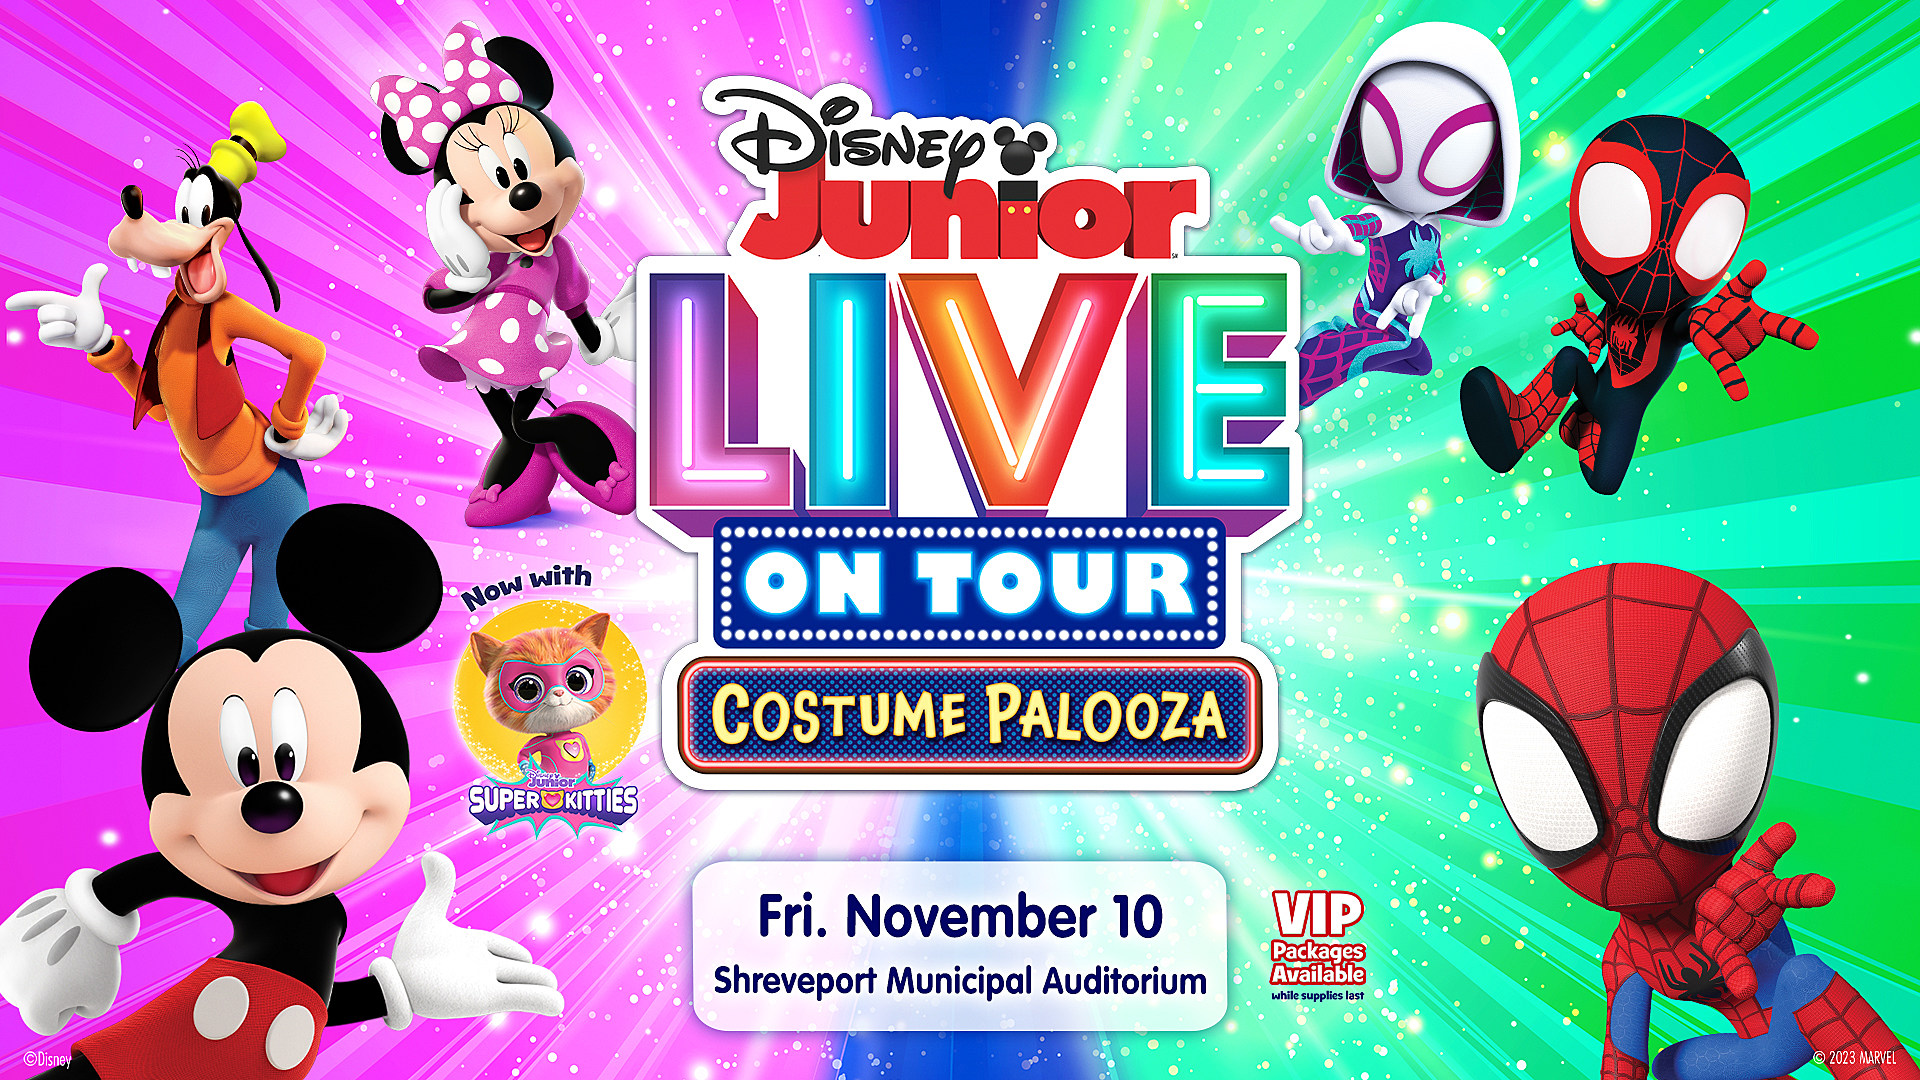 Disney Junior Live: Costume Palooza Coming To Shreveport